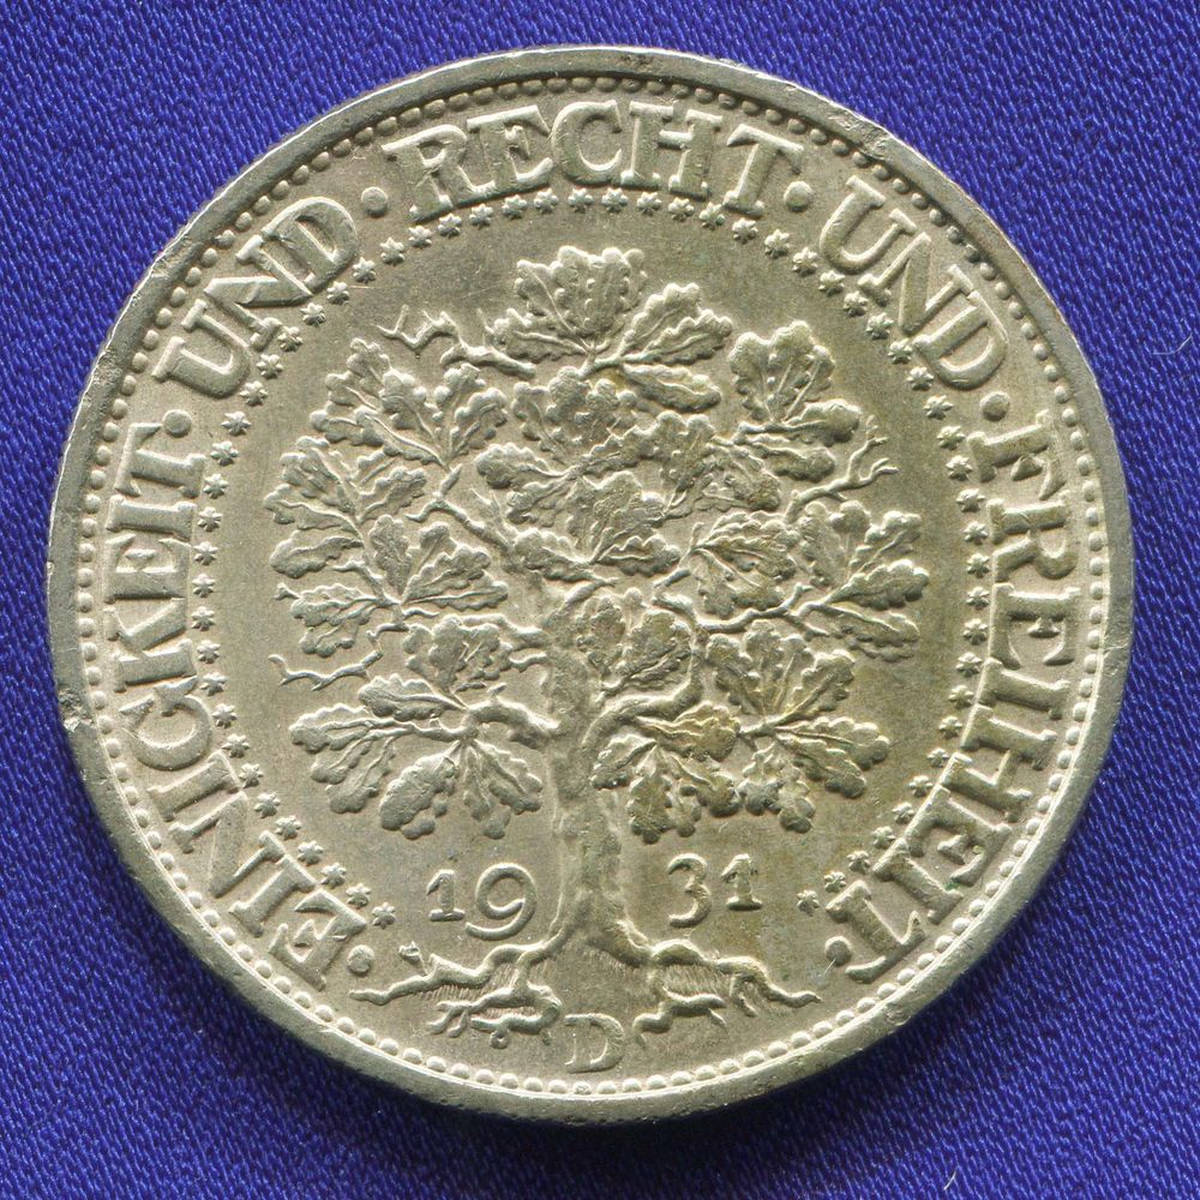 Германия 5 марок 1931 UNC 